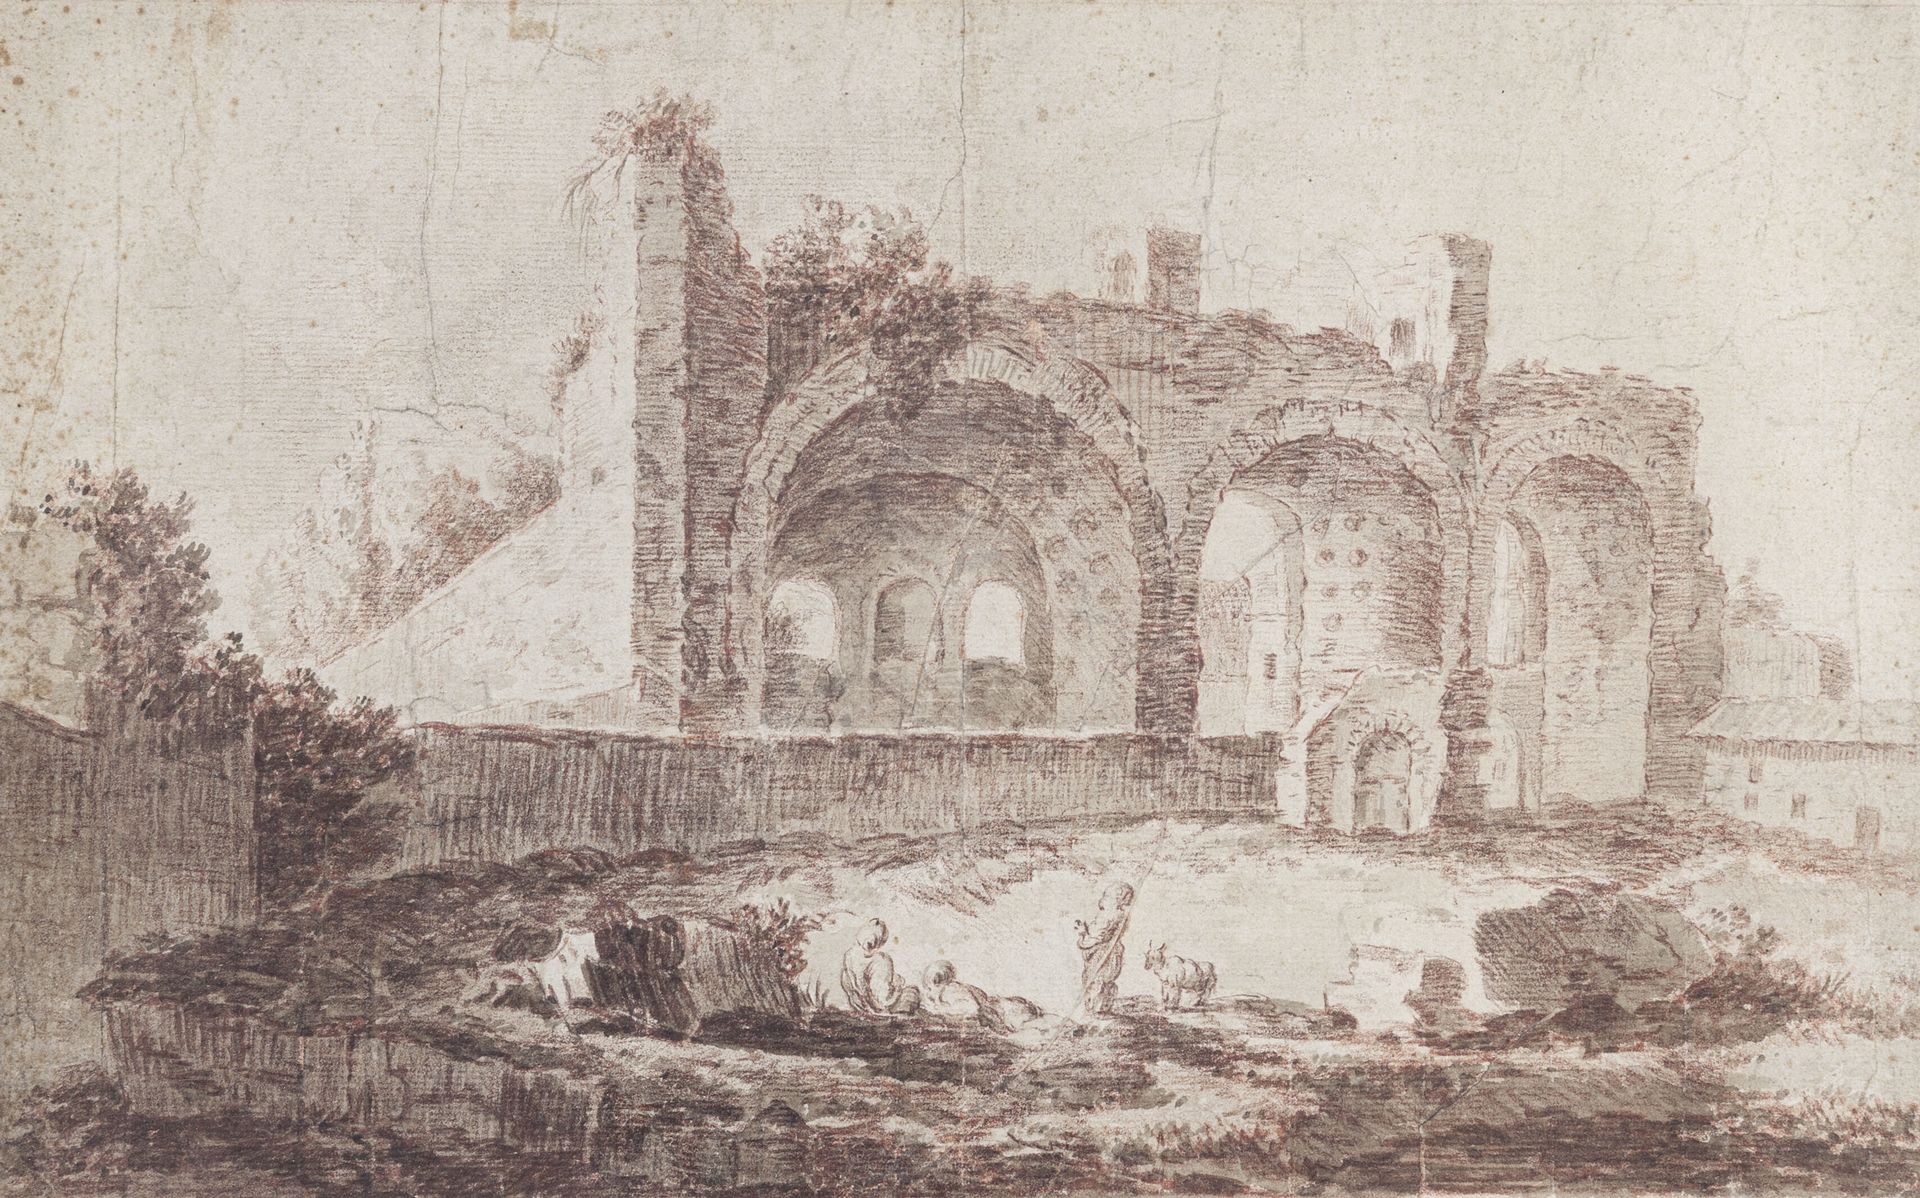 Null 18世纪的法国学校
意大利活泼的废墟
桑基和灰色水洗
H.23.5 cm W. 37.5 cm DB
许多褶皱